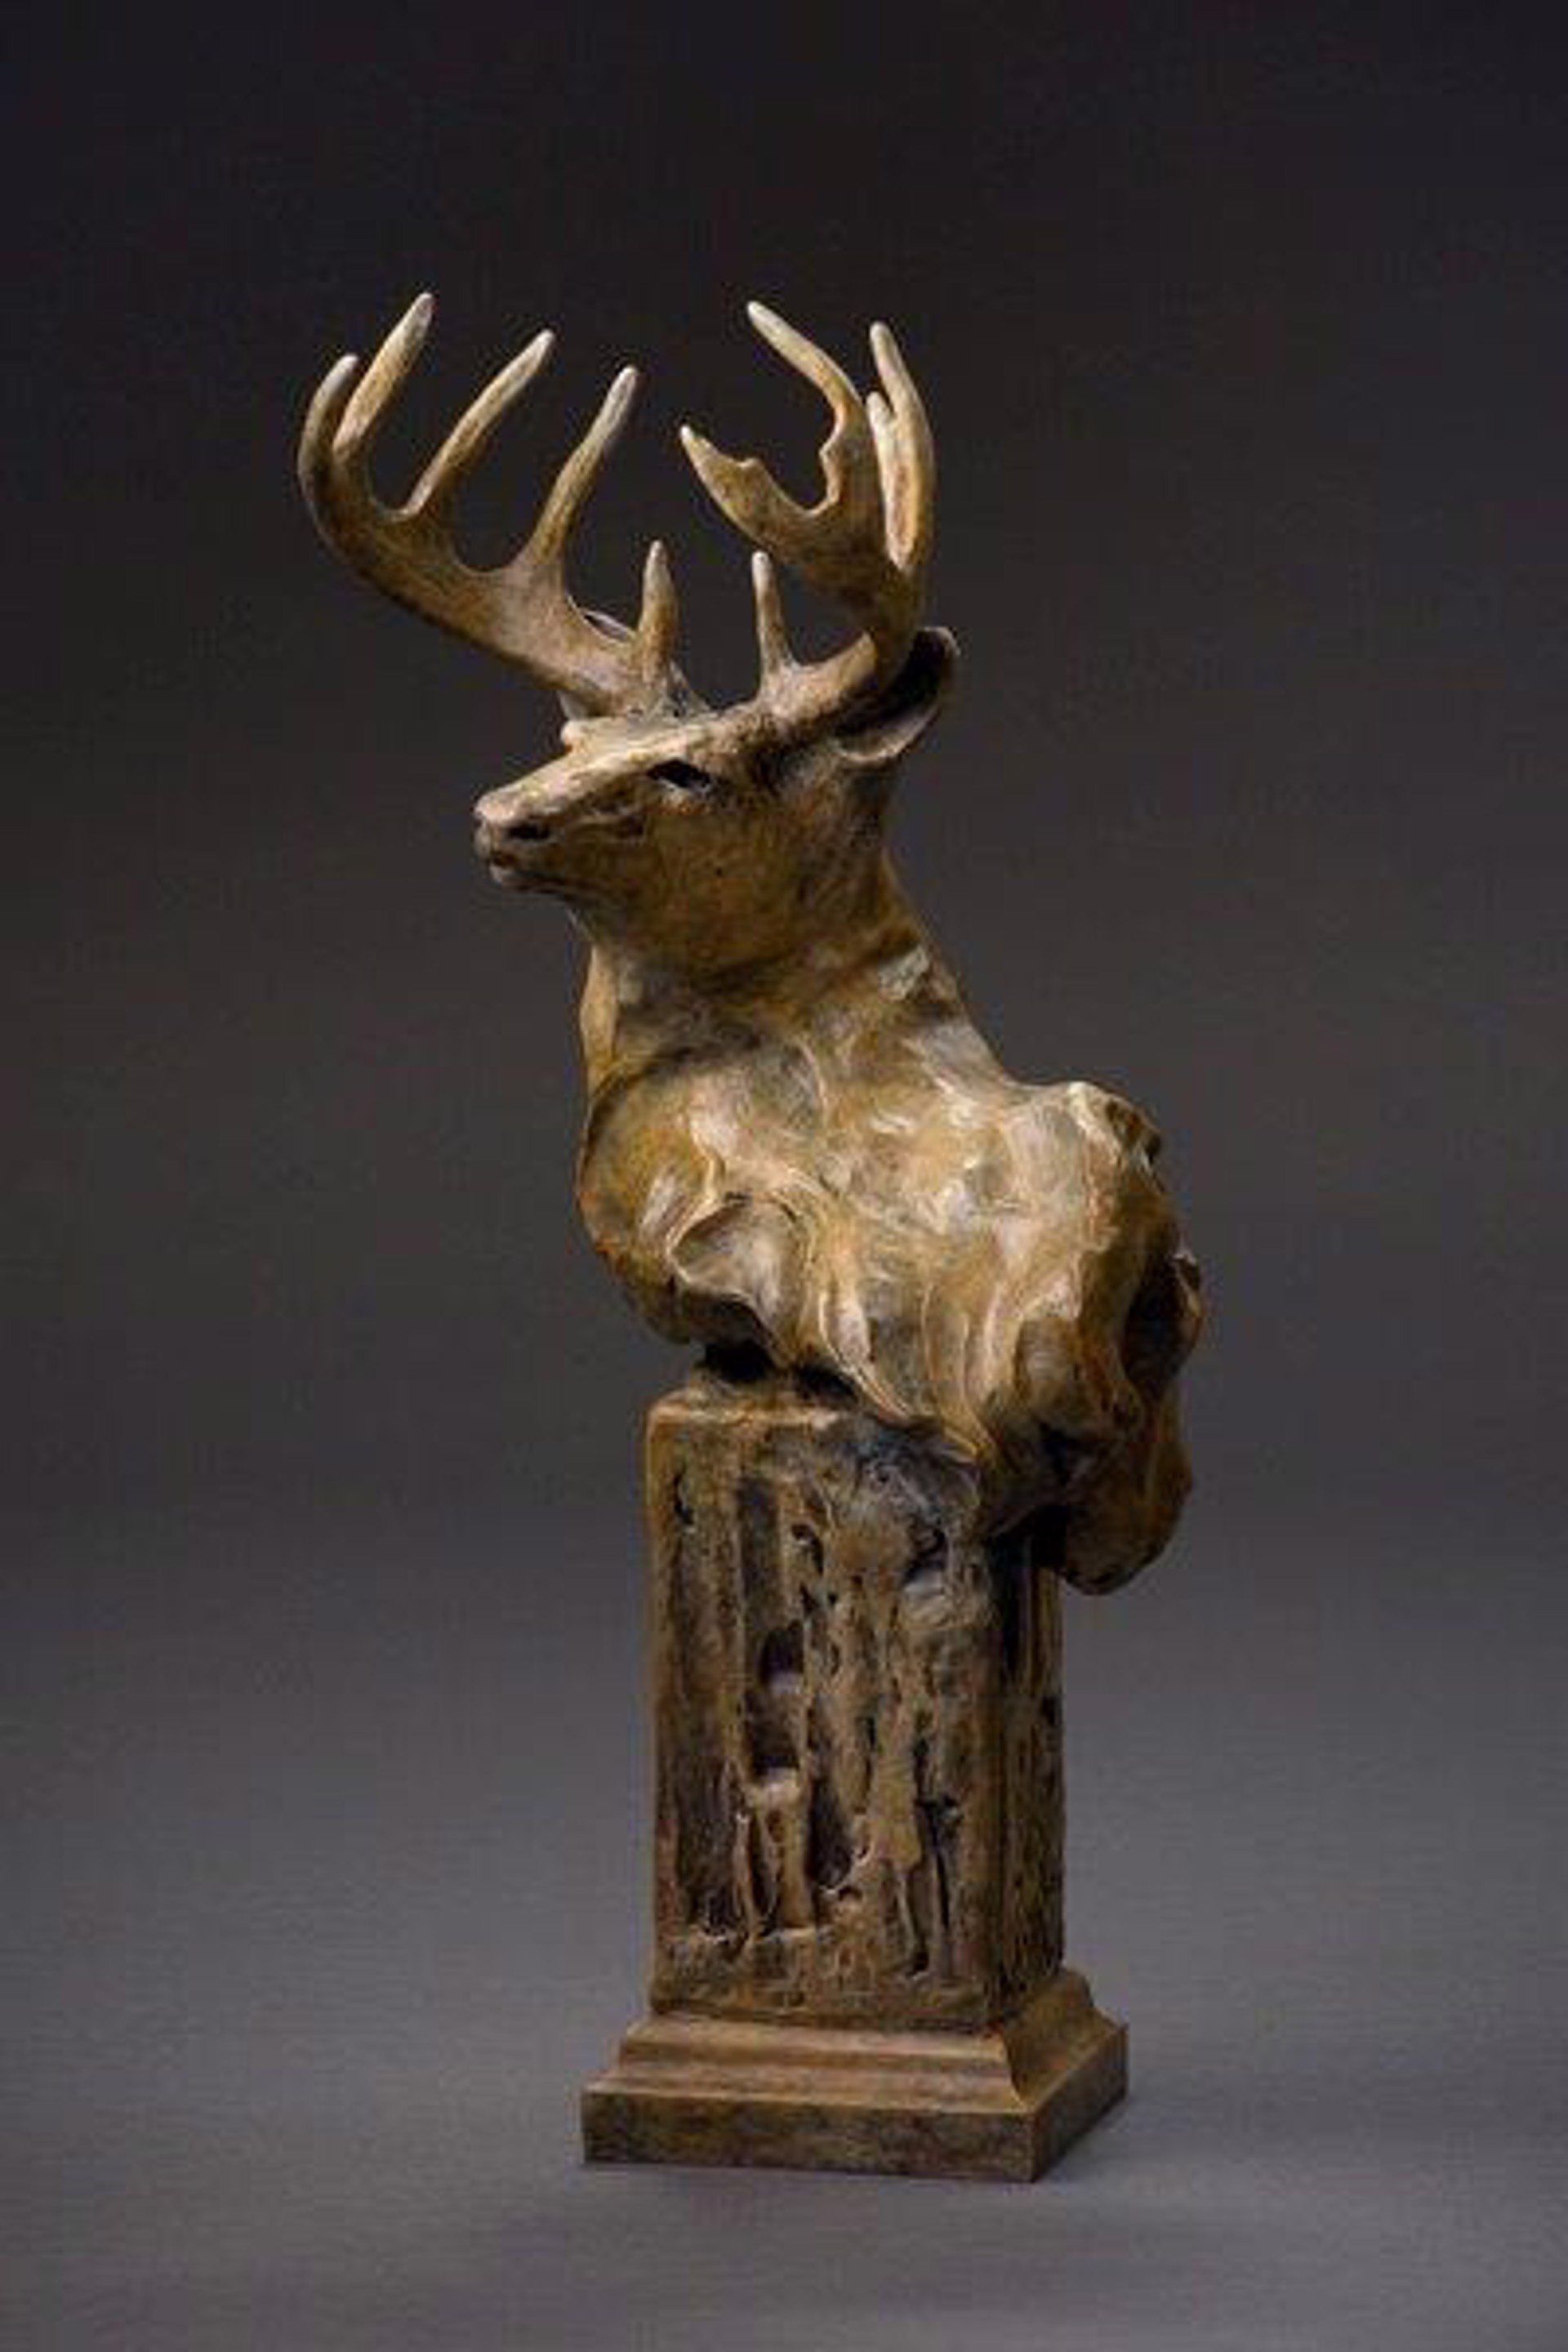 Whitetail Deer Bust #14/35 by Sherry Salari Sander